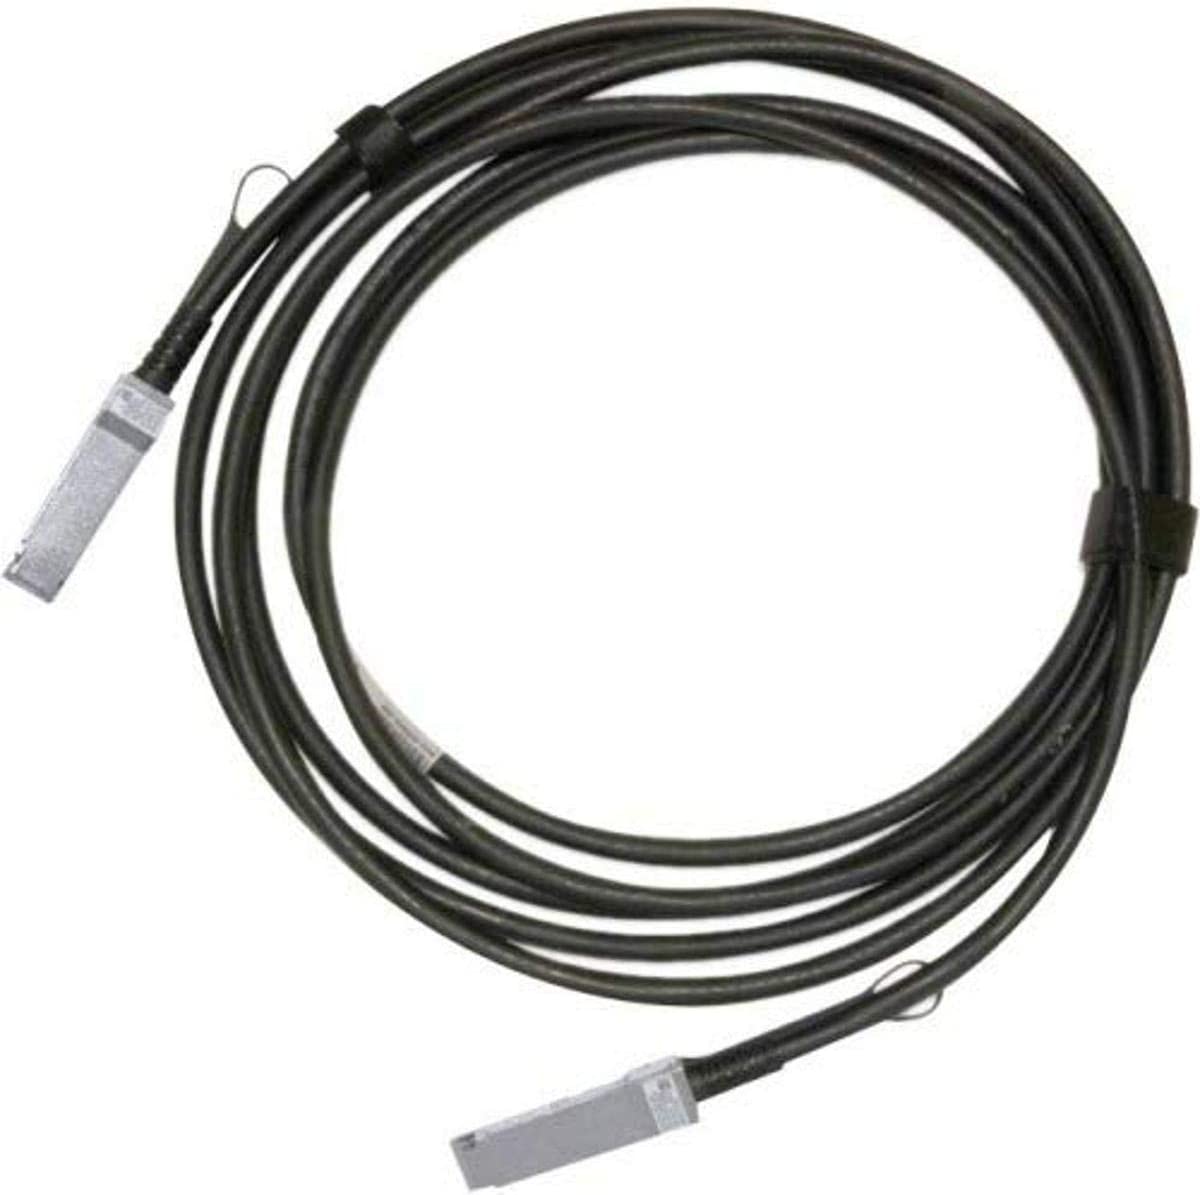 Mellanox Passive Copper Cable, ETH 100GbE, 100Gb/s, QSFP28, 1m, Black, 30AWG, CA-N